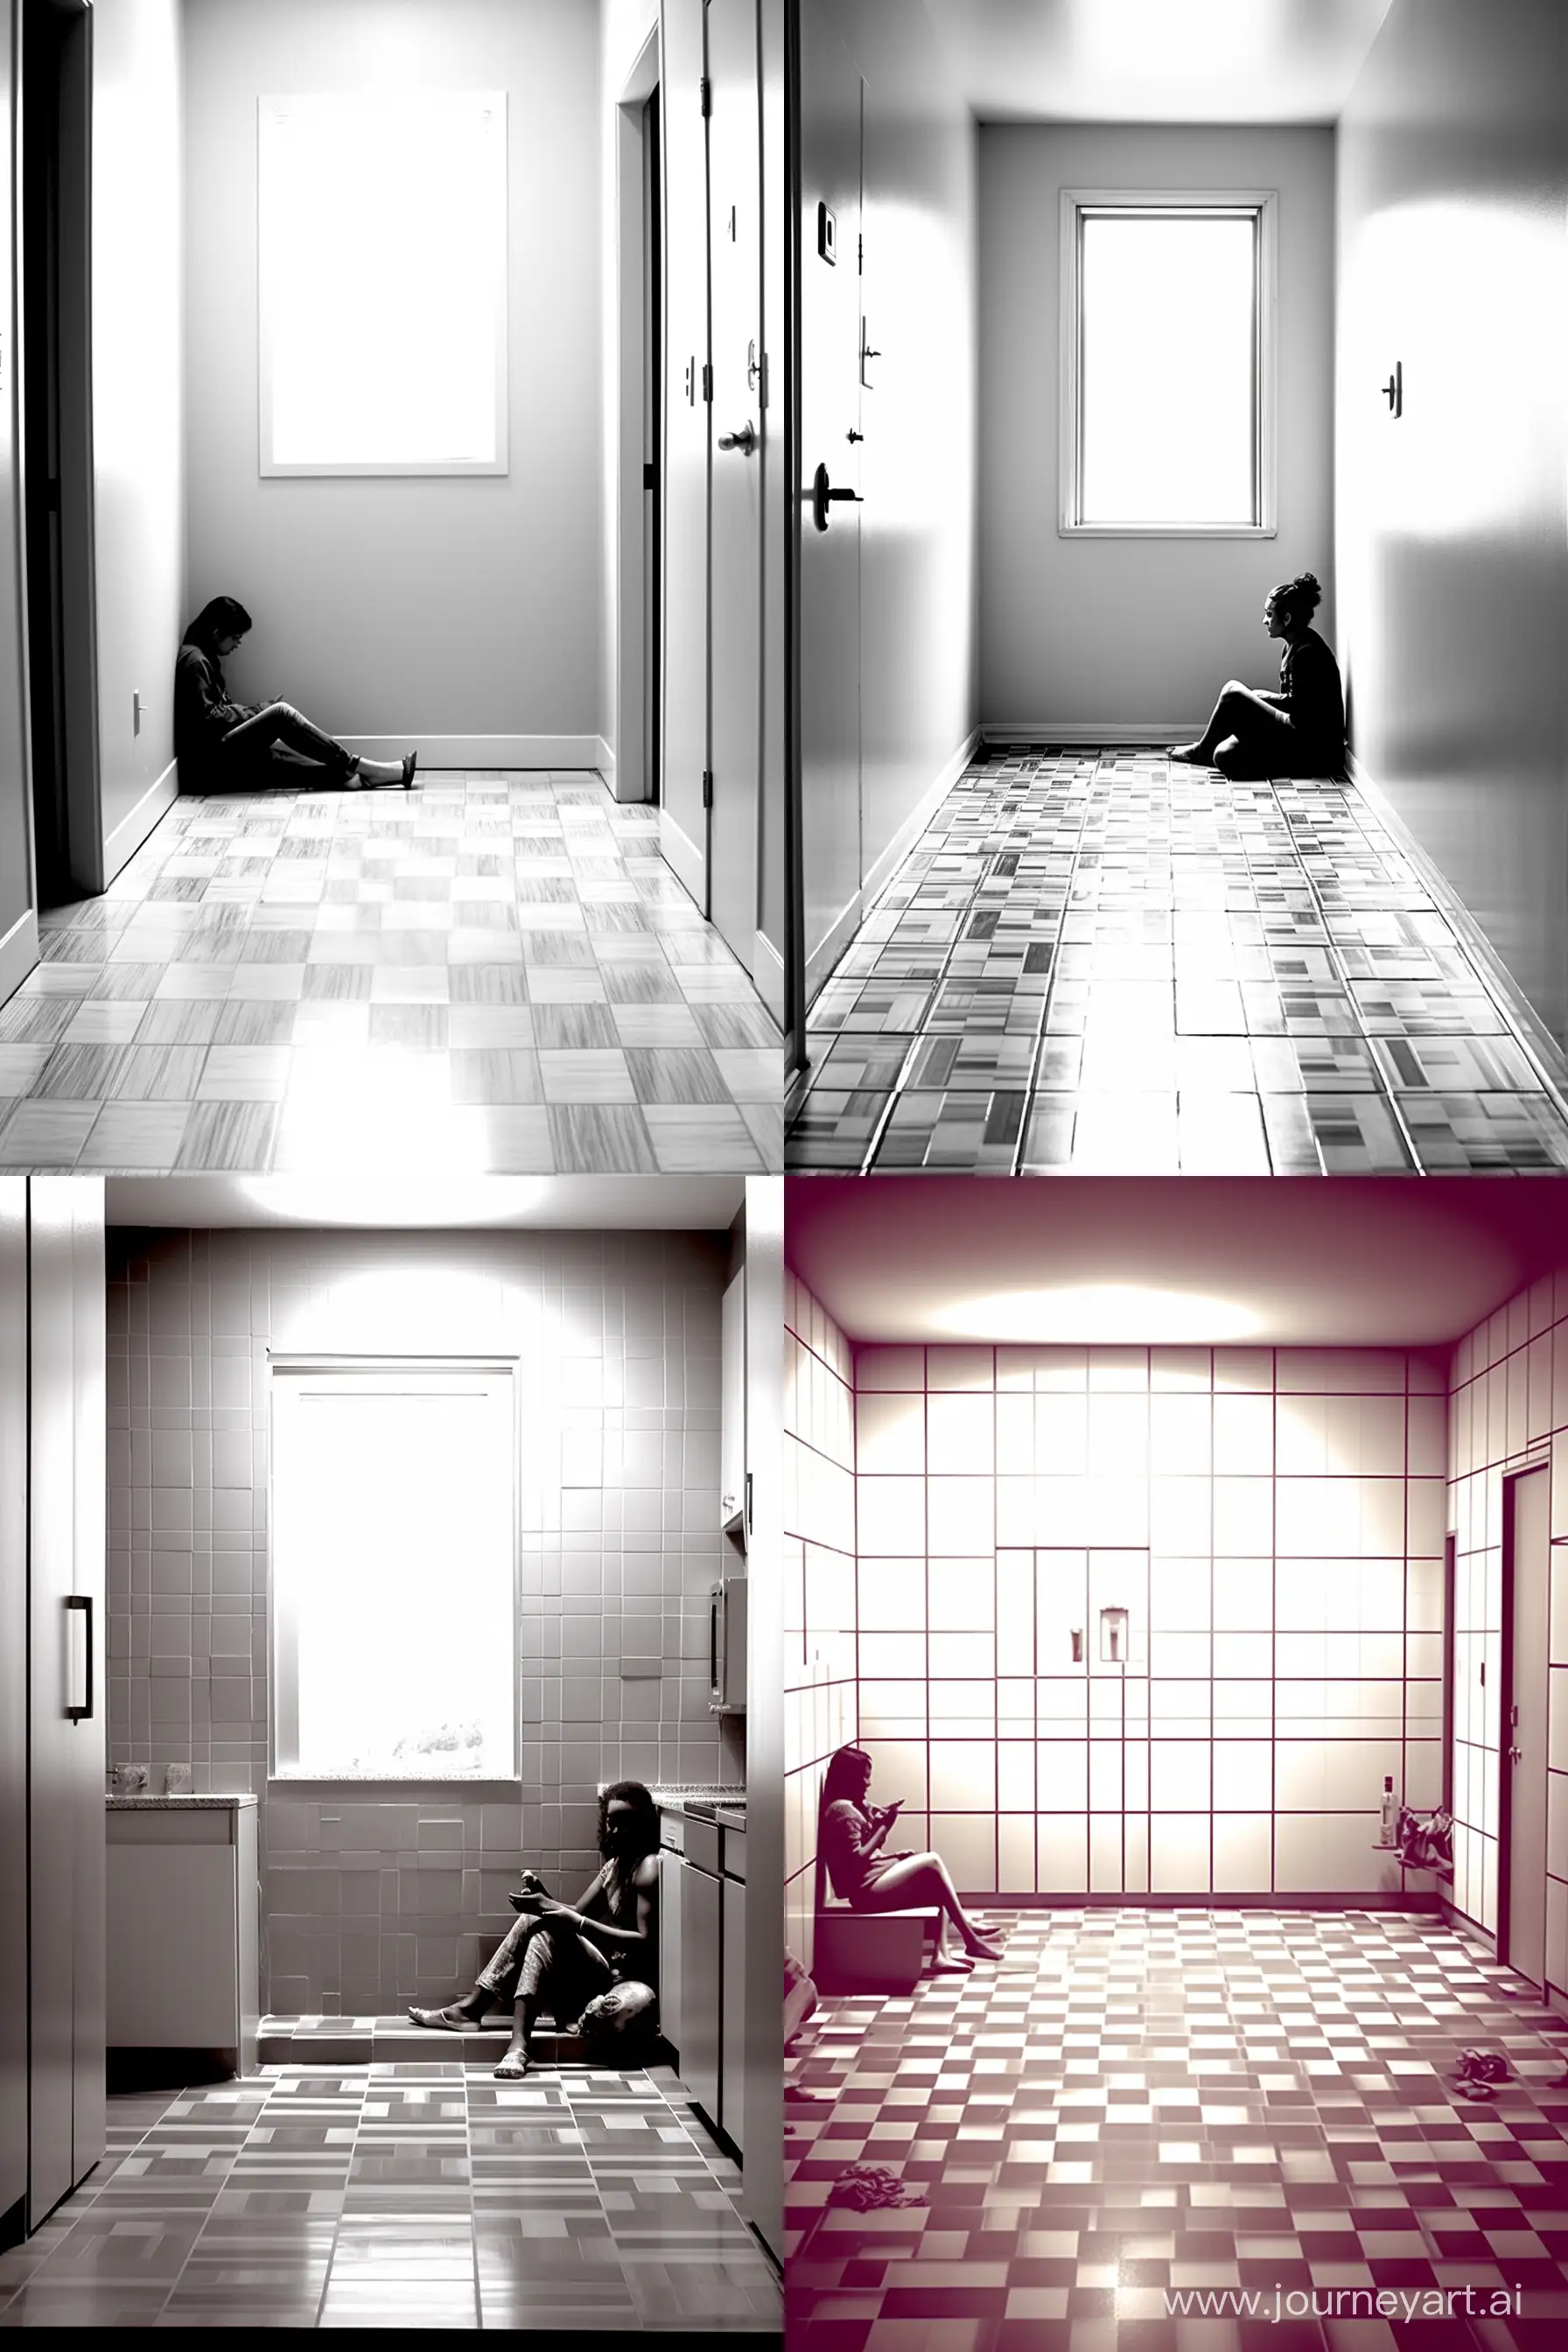 Disturbing-Psychotic-Scene-in-Monochromatic-Bathroom